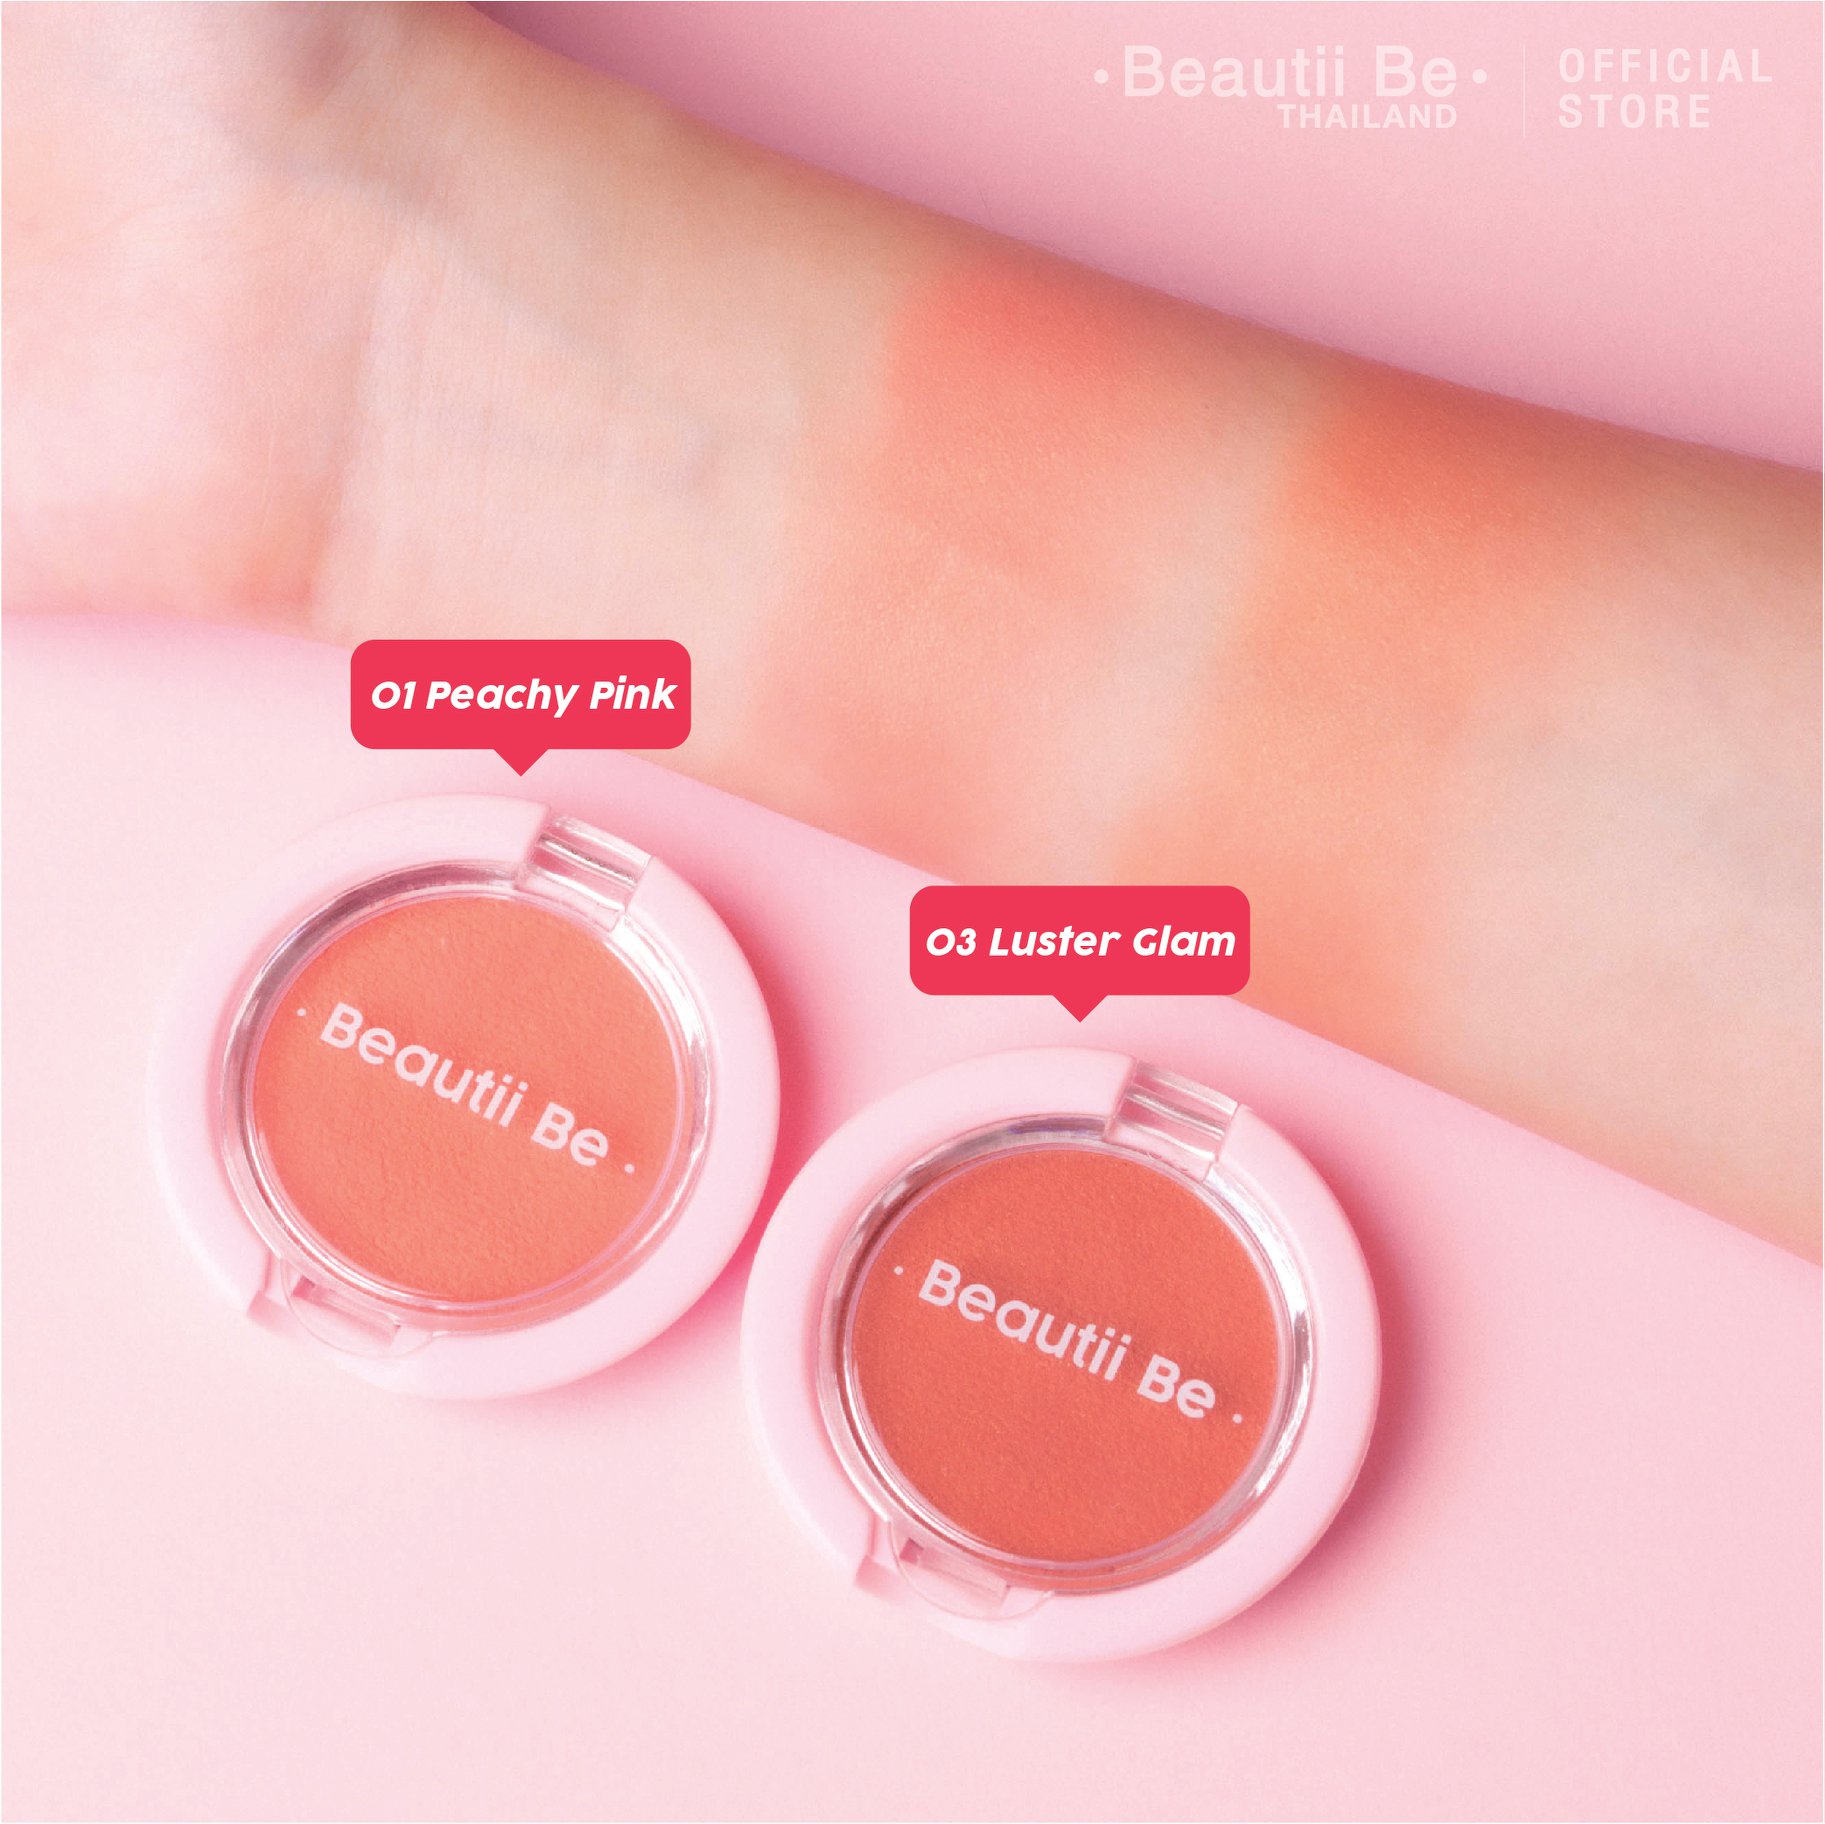 Beautii Be Love My Blush #01 Peachy Pink 2.7g บรัชออนไร้ฝุ่น เนื้อแคชเมียร์